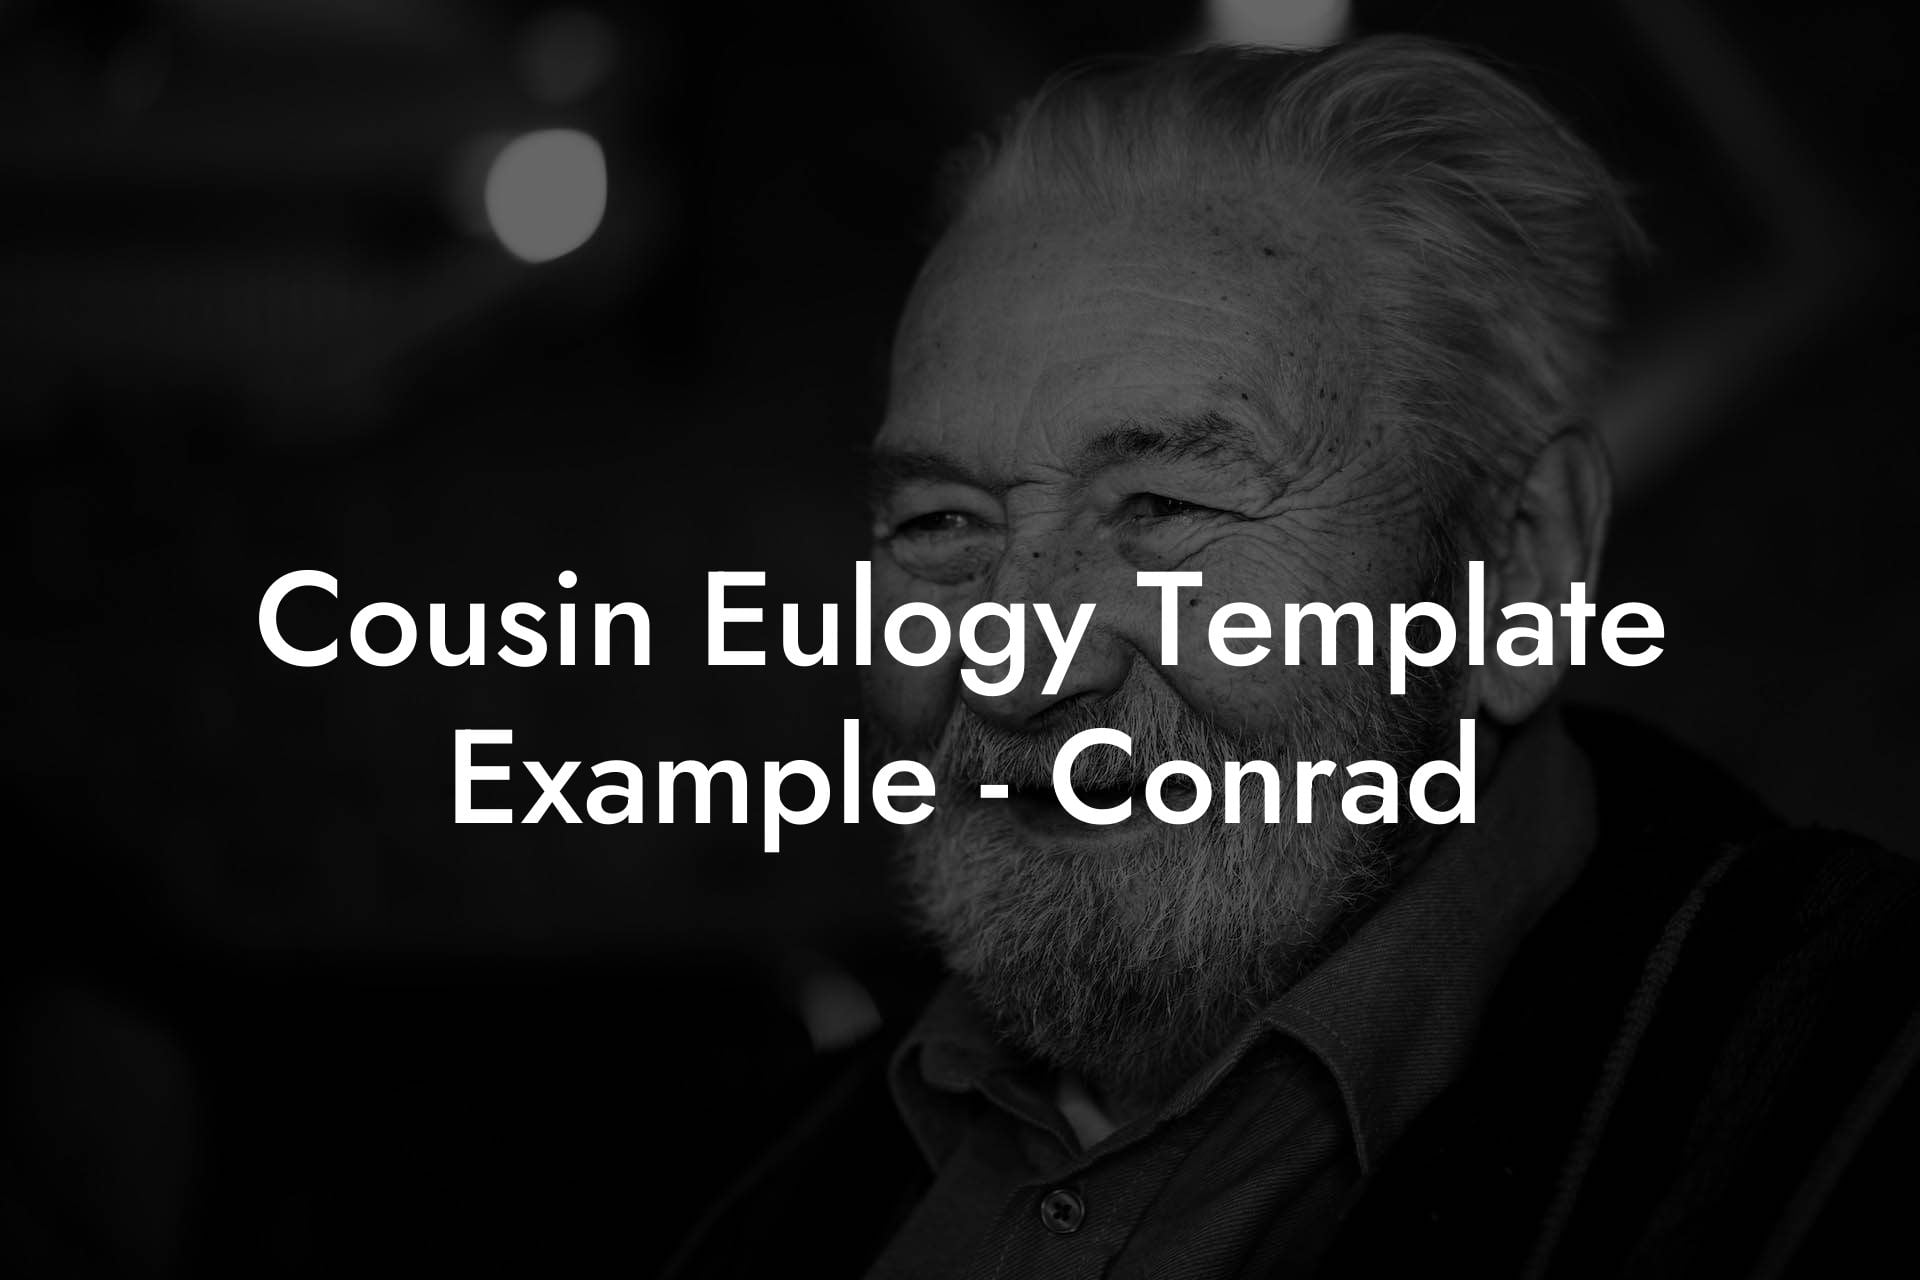 Cousin Eulogy Template Example - Conrad